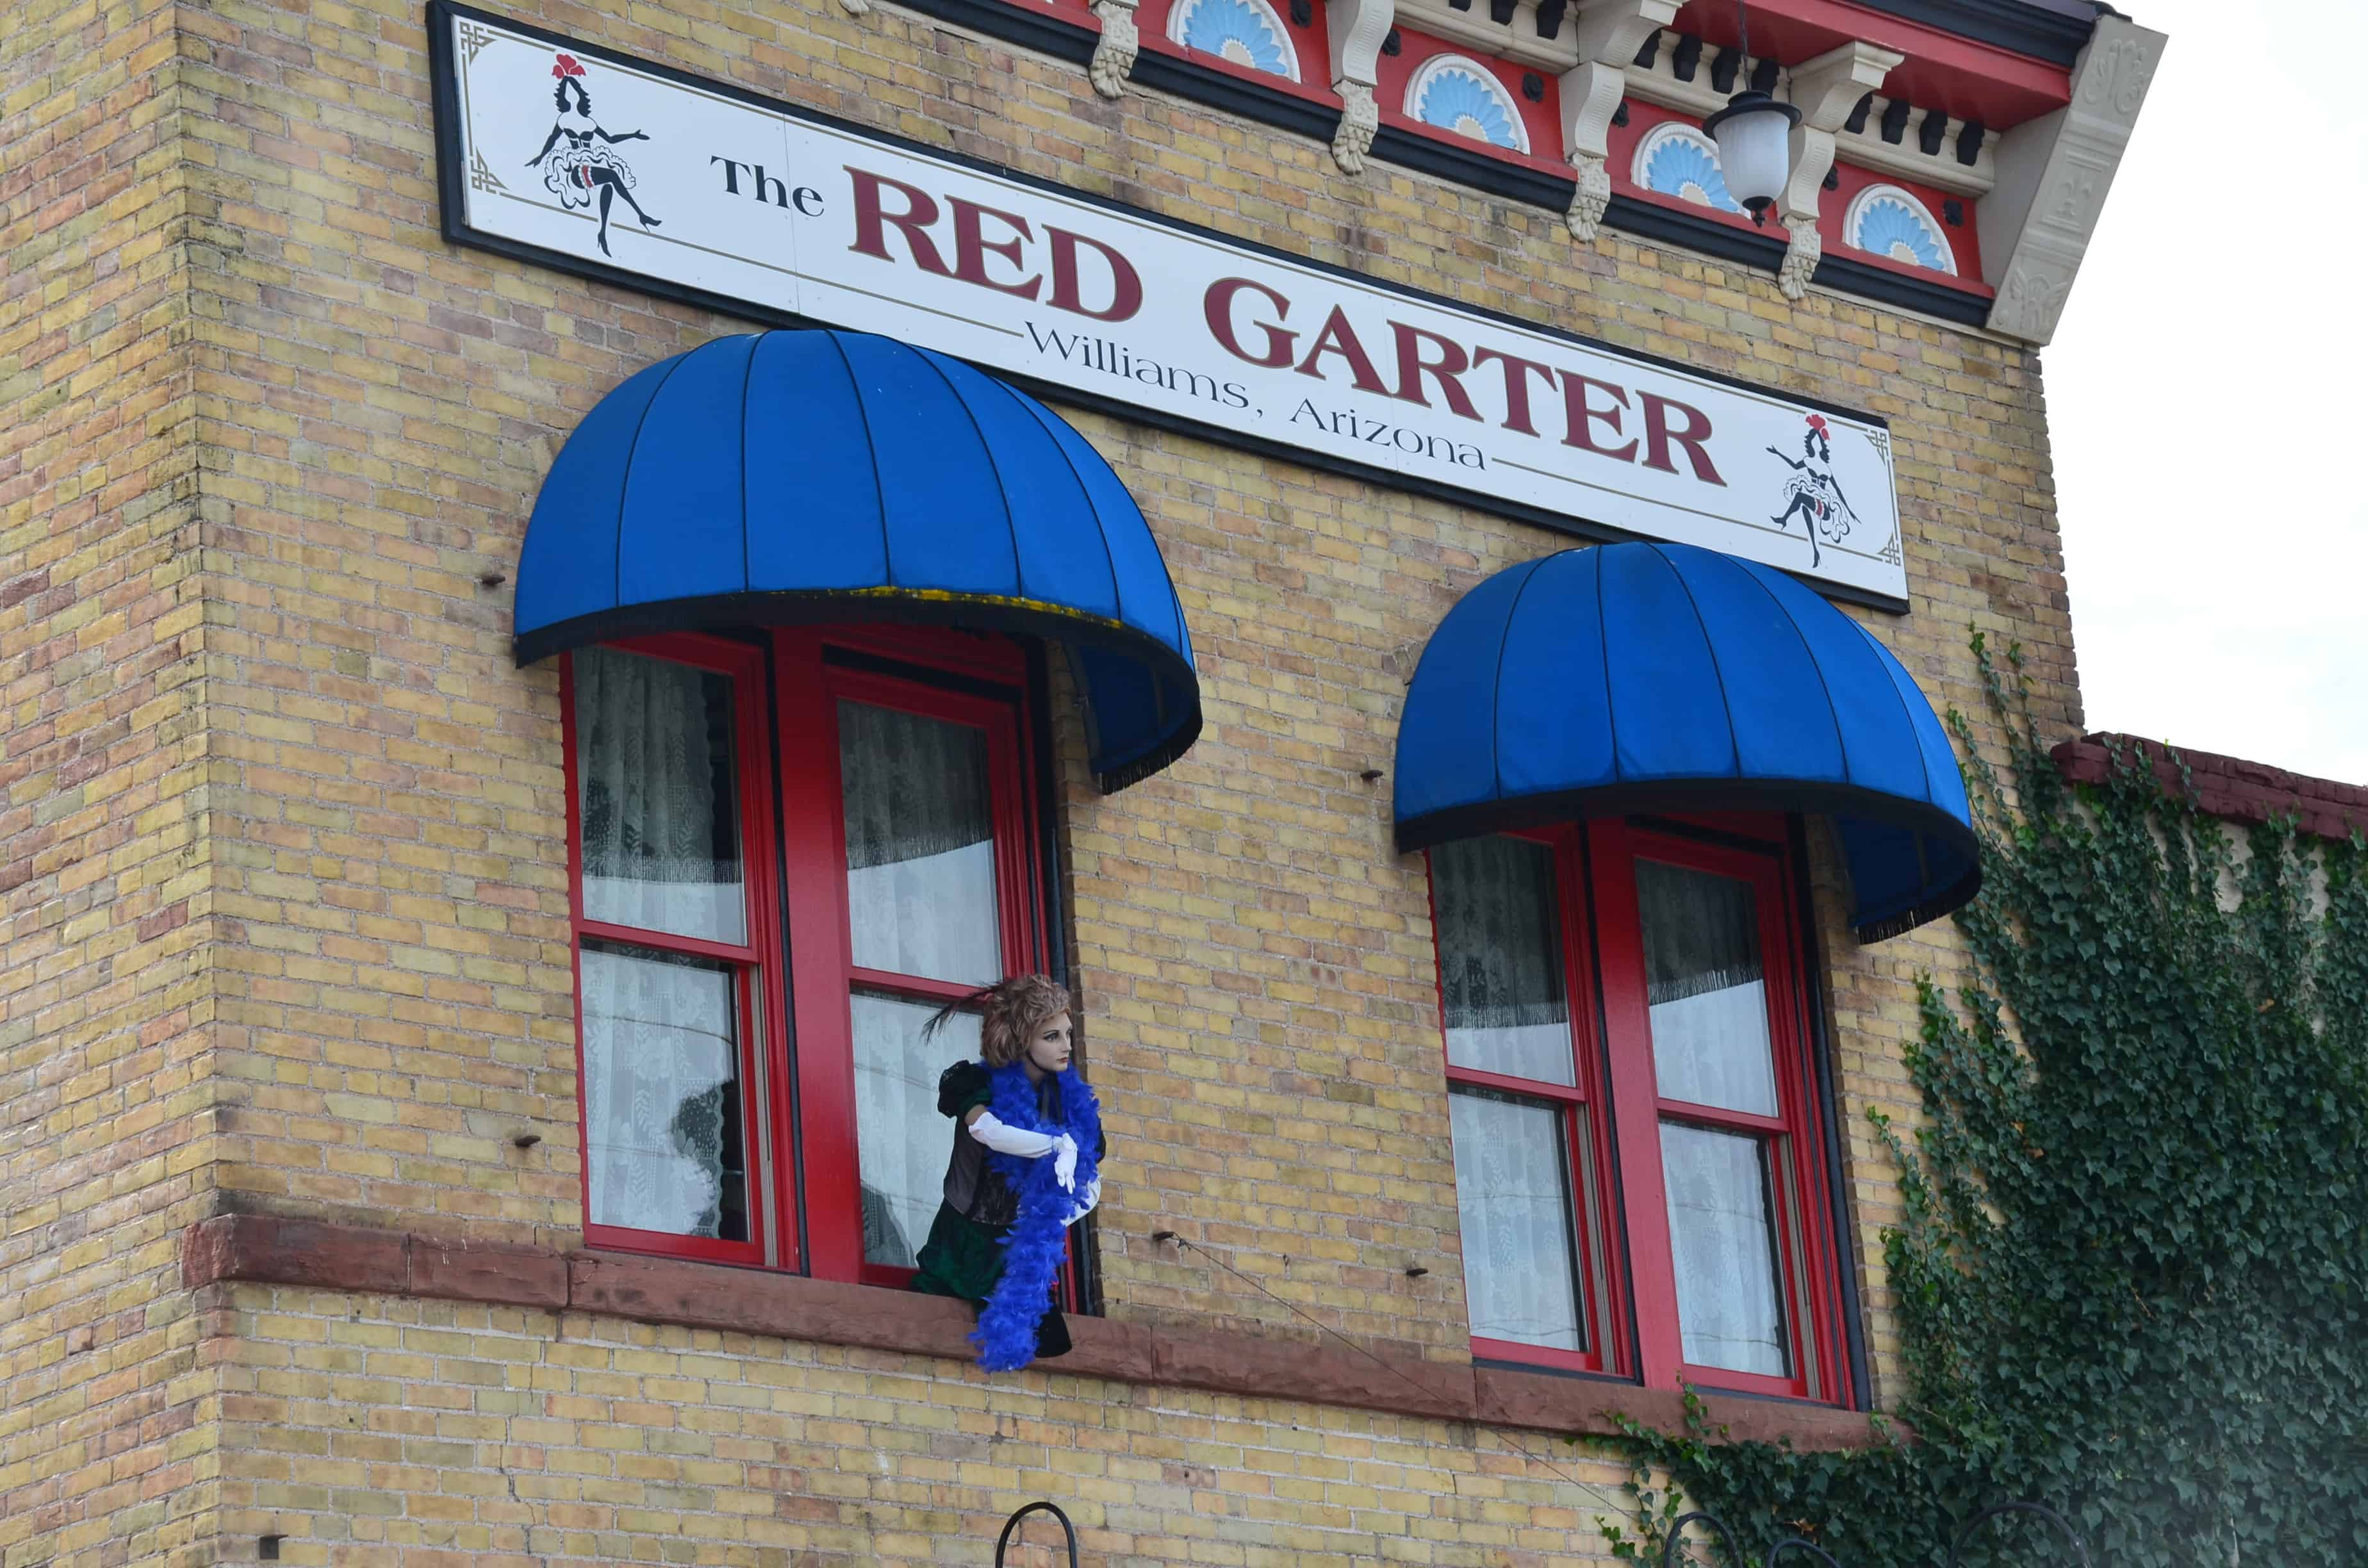 Red Garter Inn in Williams, Arizona